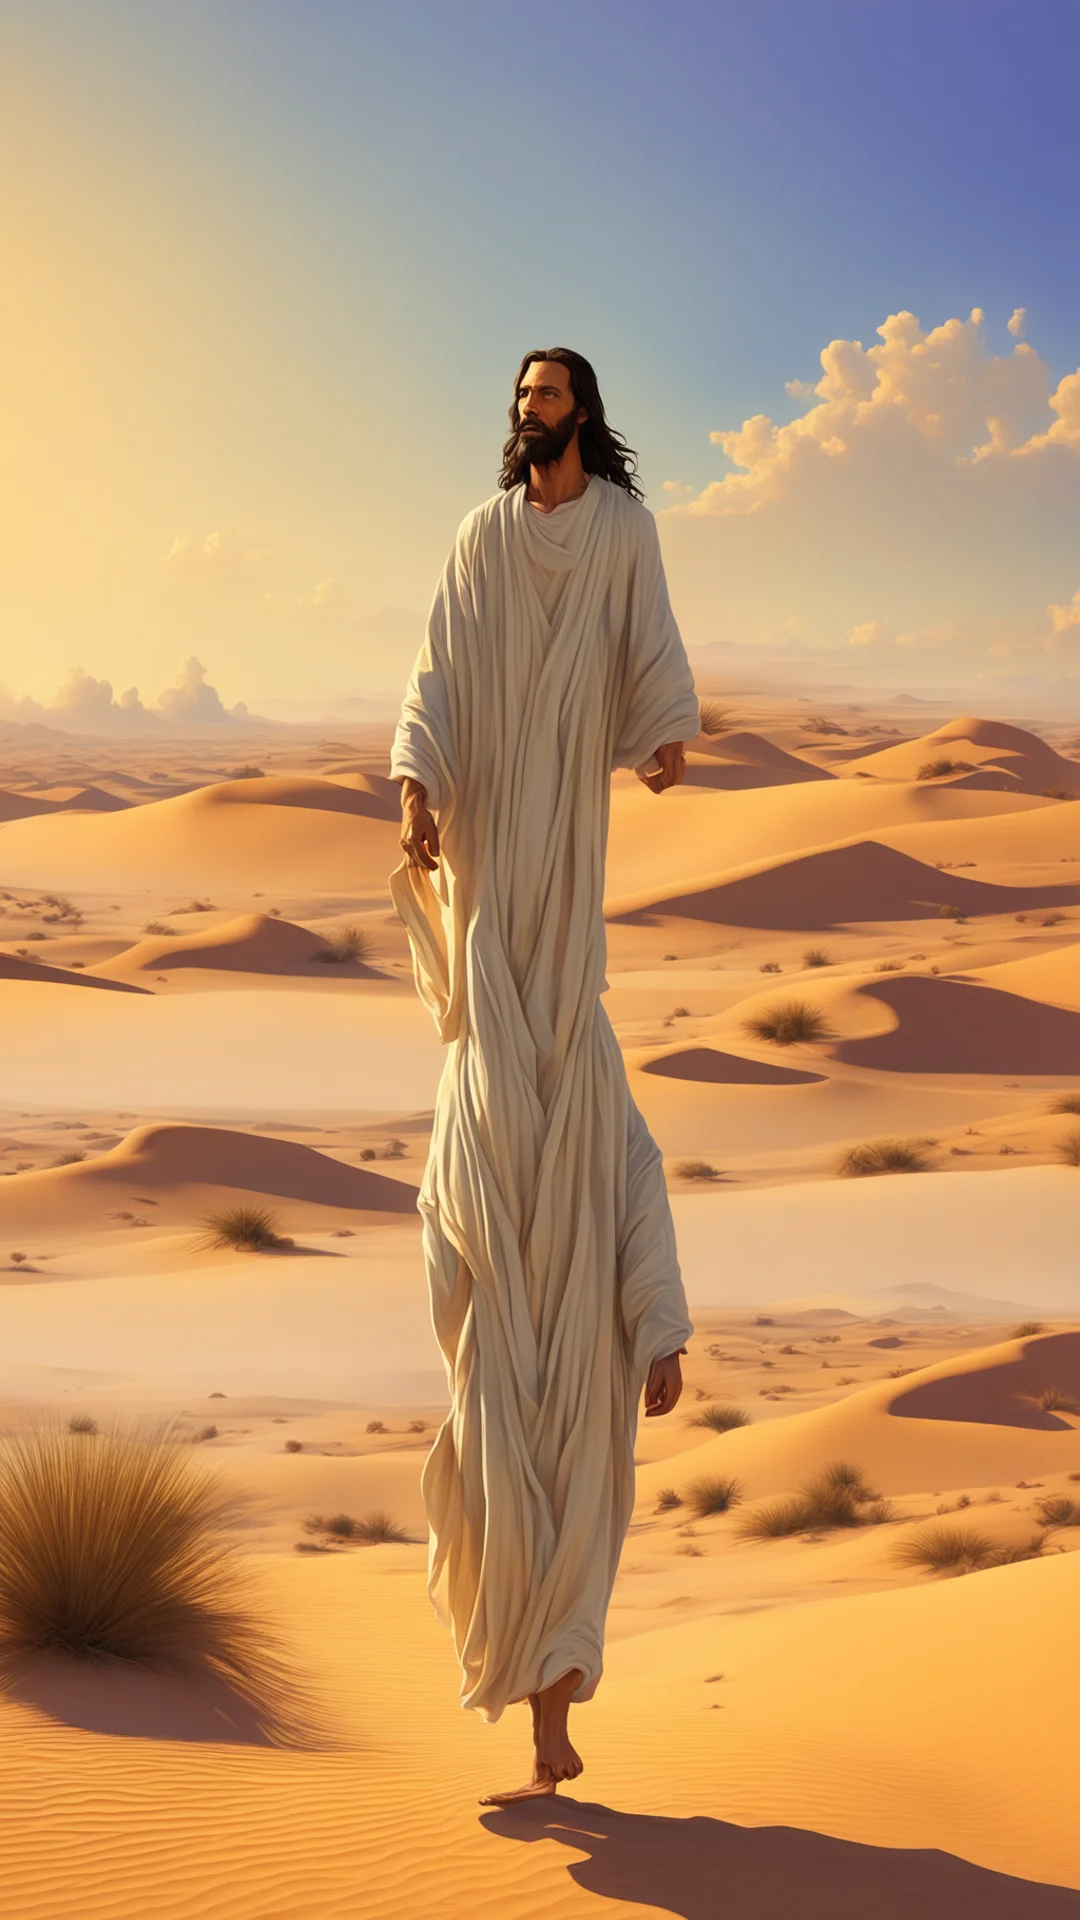 jesus walking in style of oil painting  octane  desert in style of pixar ar 916 stop 80 uplight tall